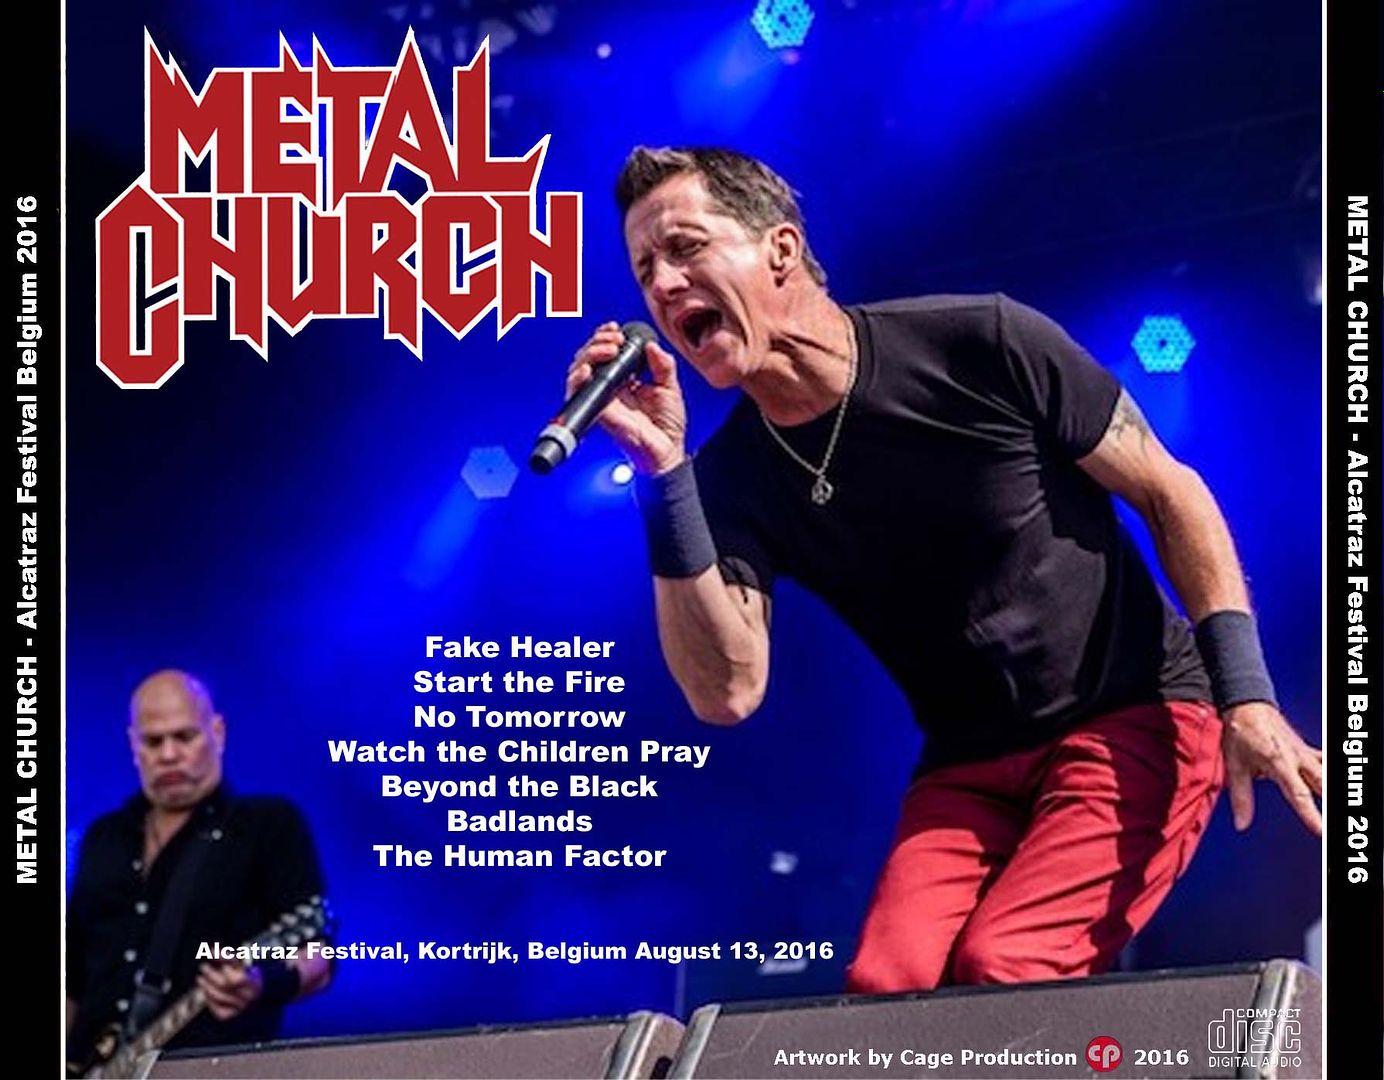 photo Metal Church-Belgium 2016 back_zpslx6dflnk.jpg